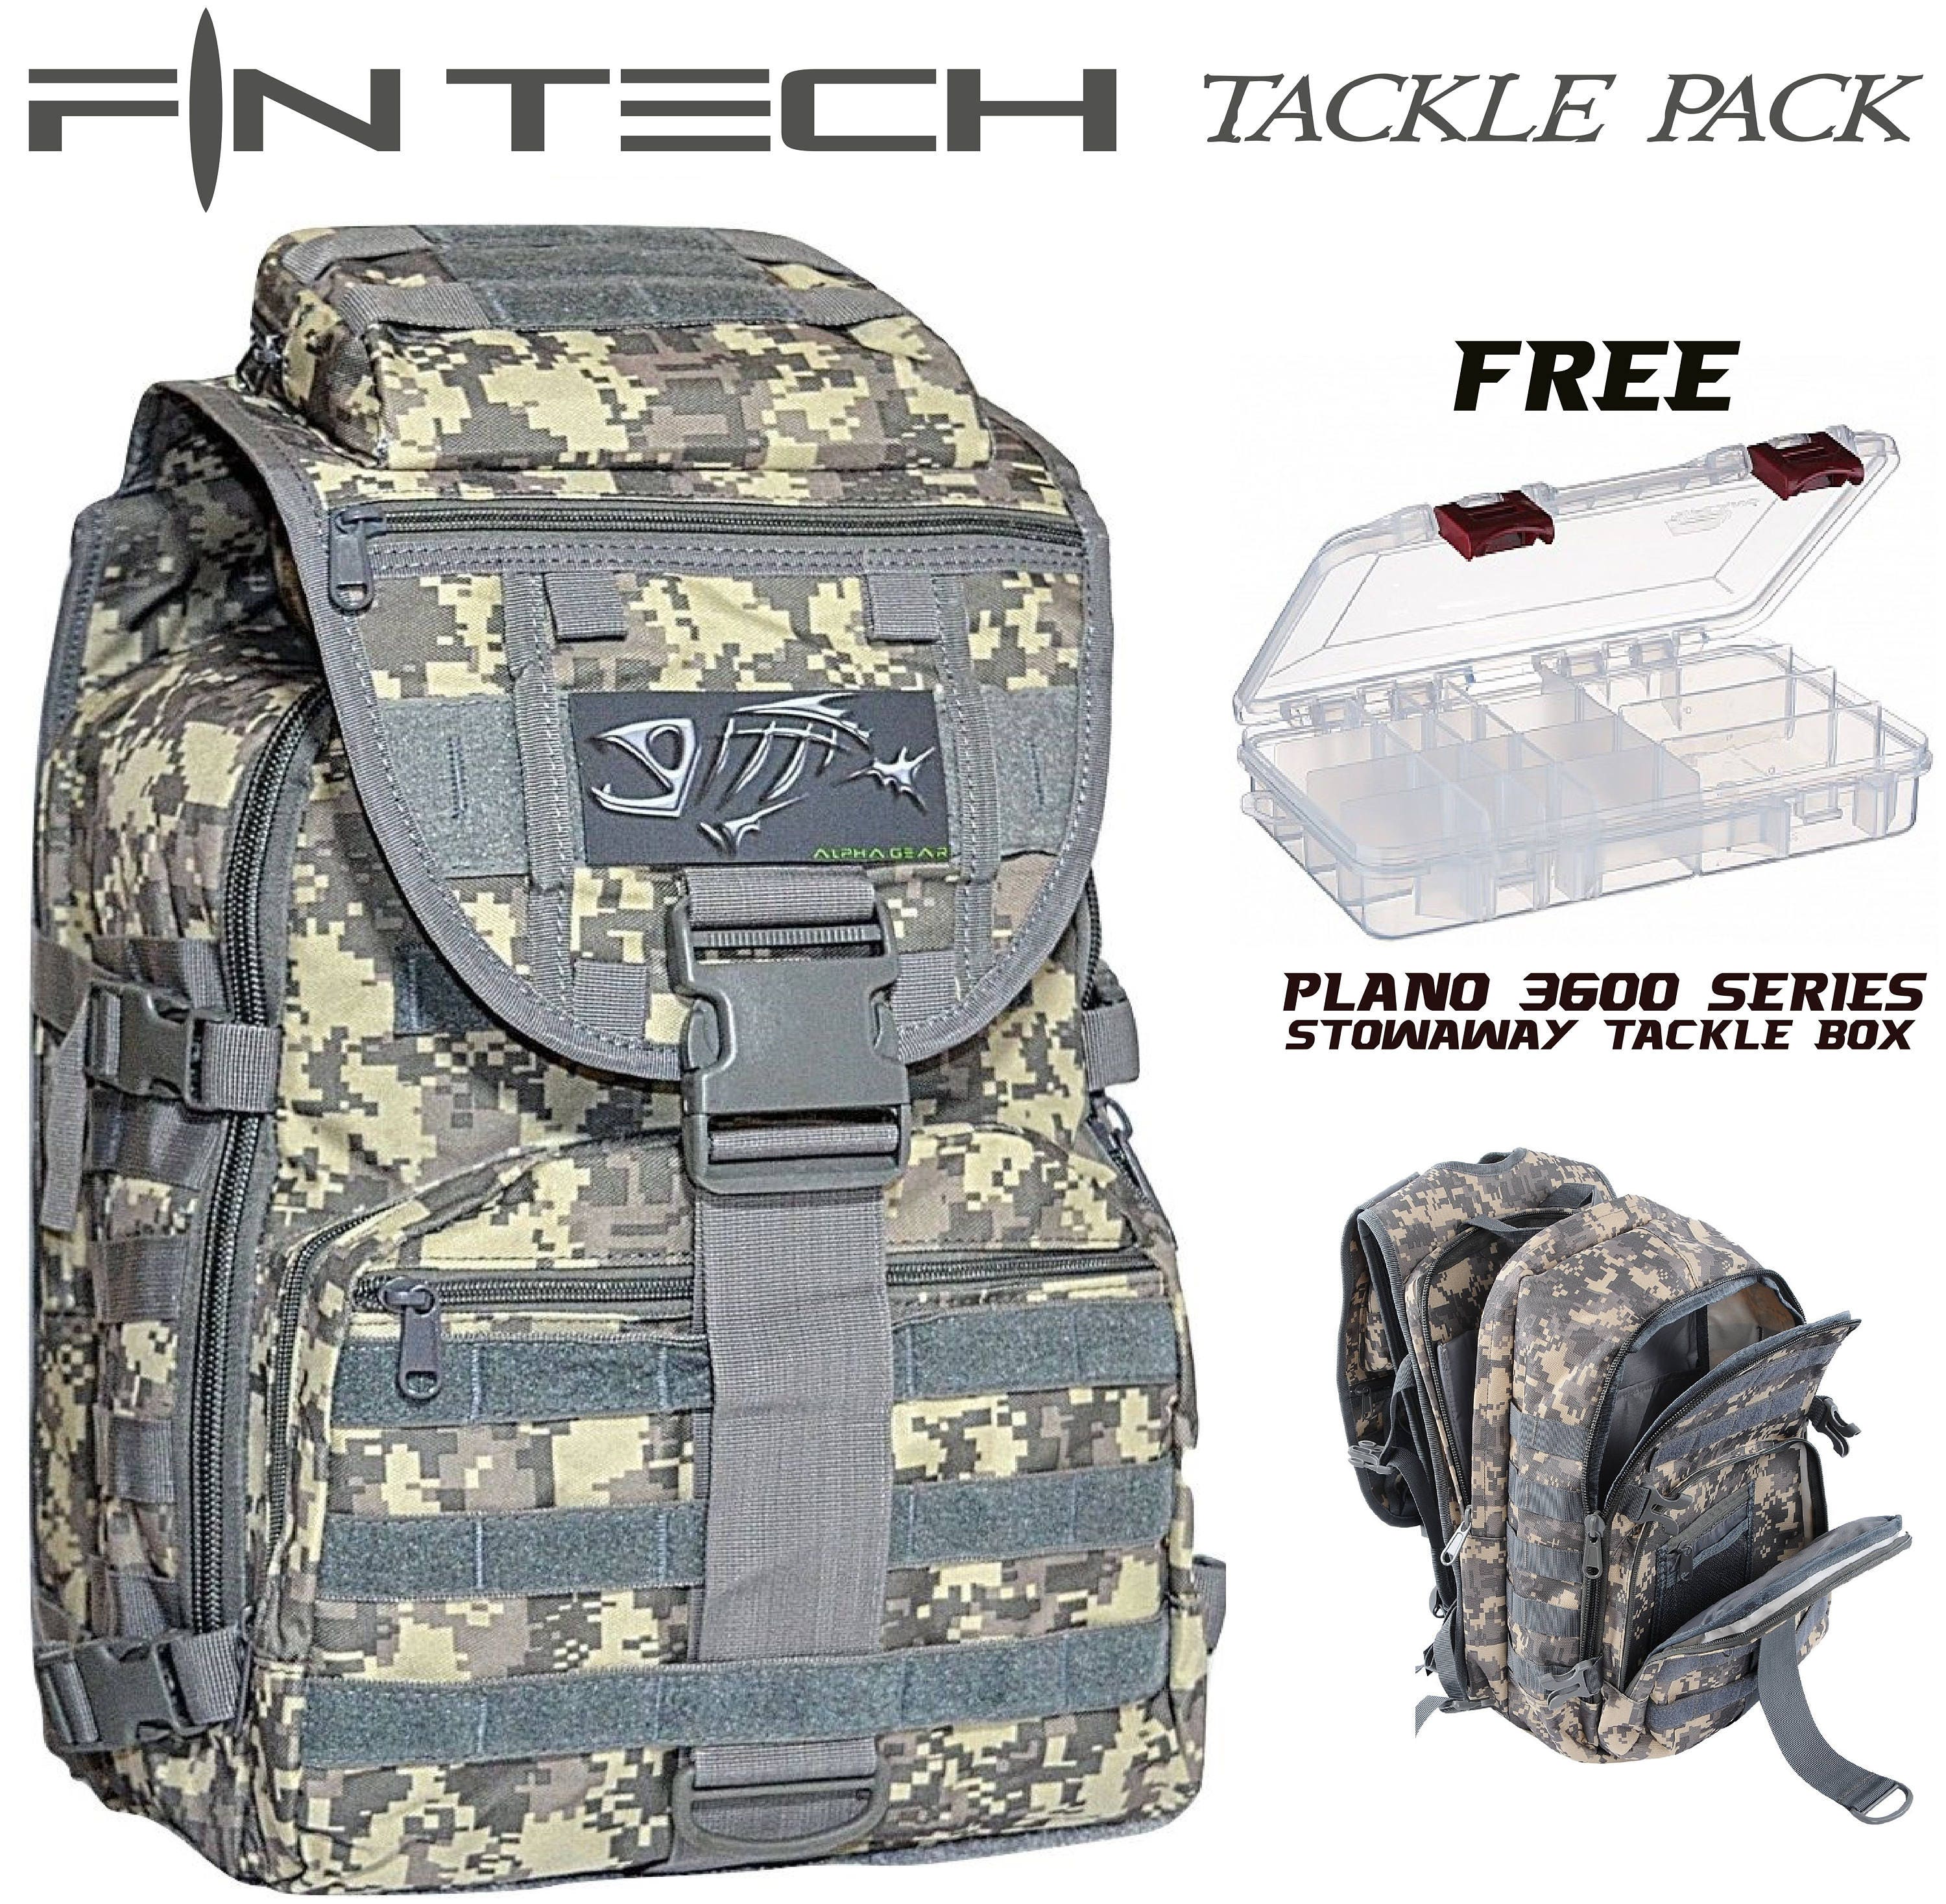 FINN TECH Fisherman Backpack Camo Tackle Box Pack FREE Plano 3600 Tackle Box